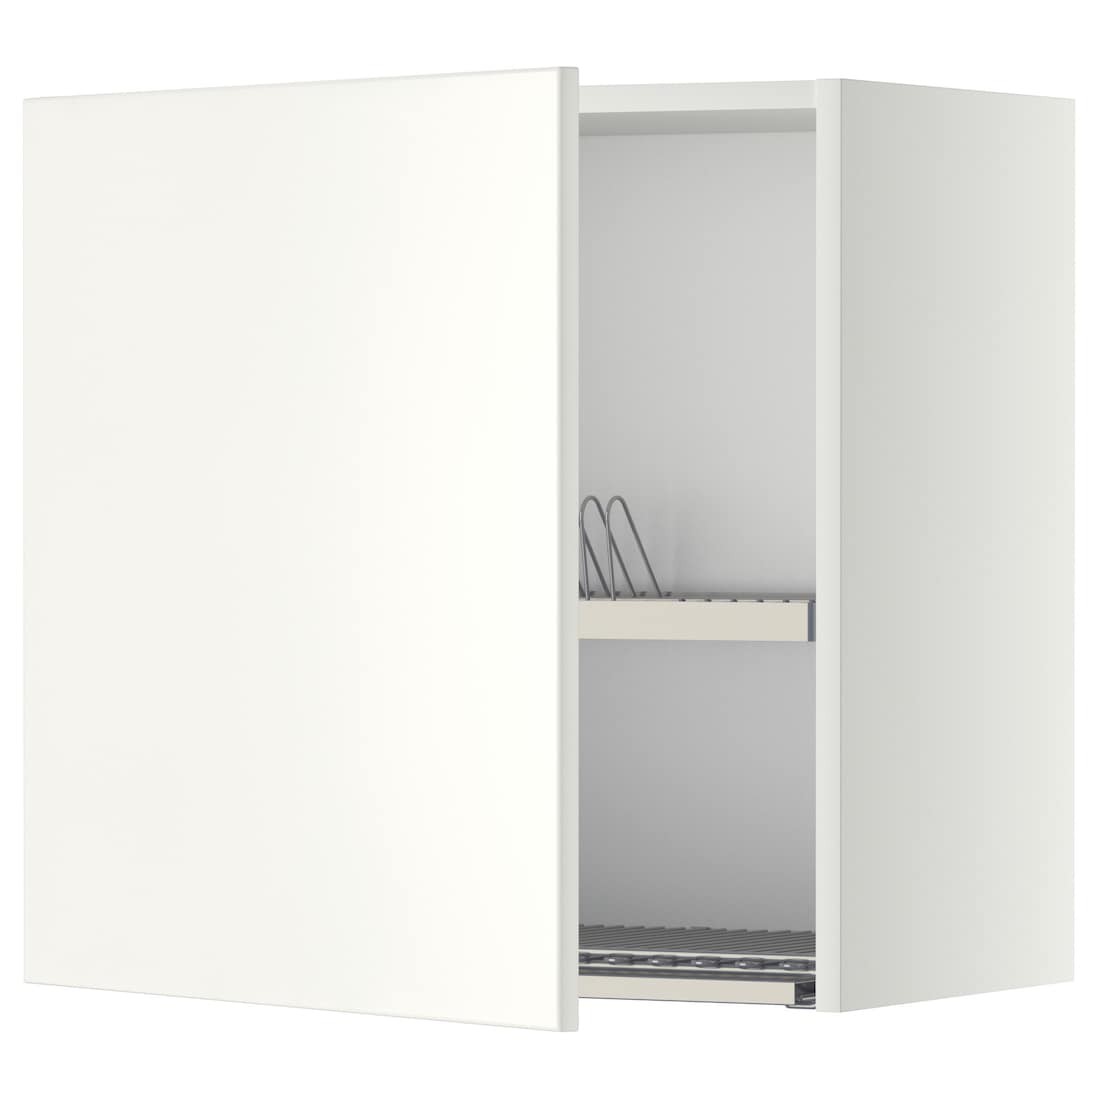 METOD МЕТОД Навесной шкаф с сушилкой, белый / Veddinge белый, 60x60 см